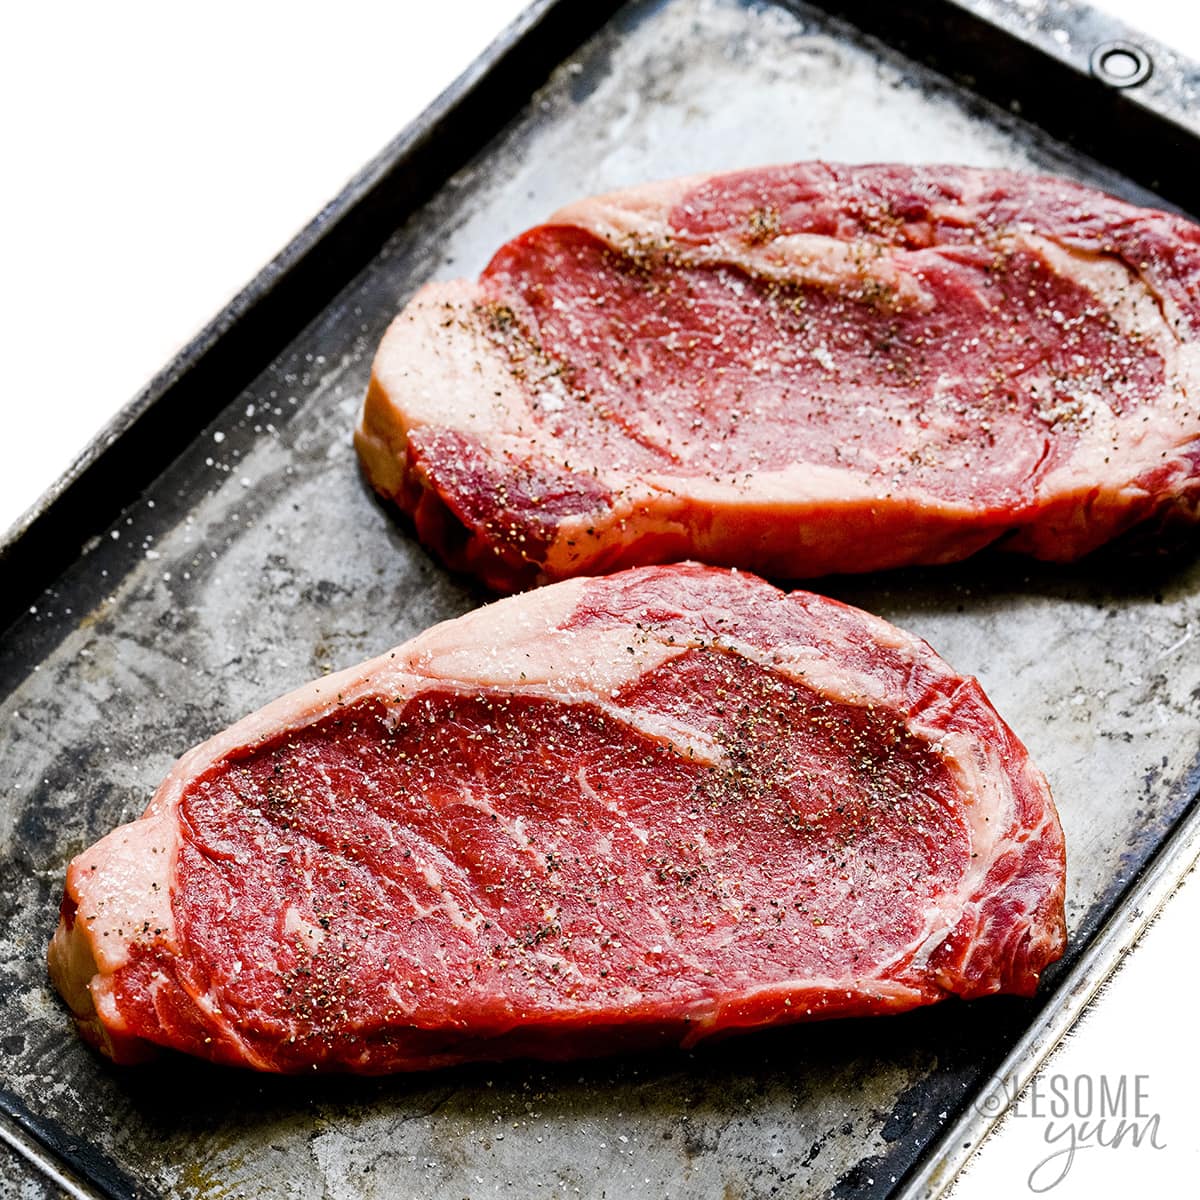 Raw steak seasoned with salt and pepper.